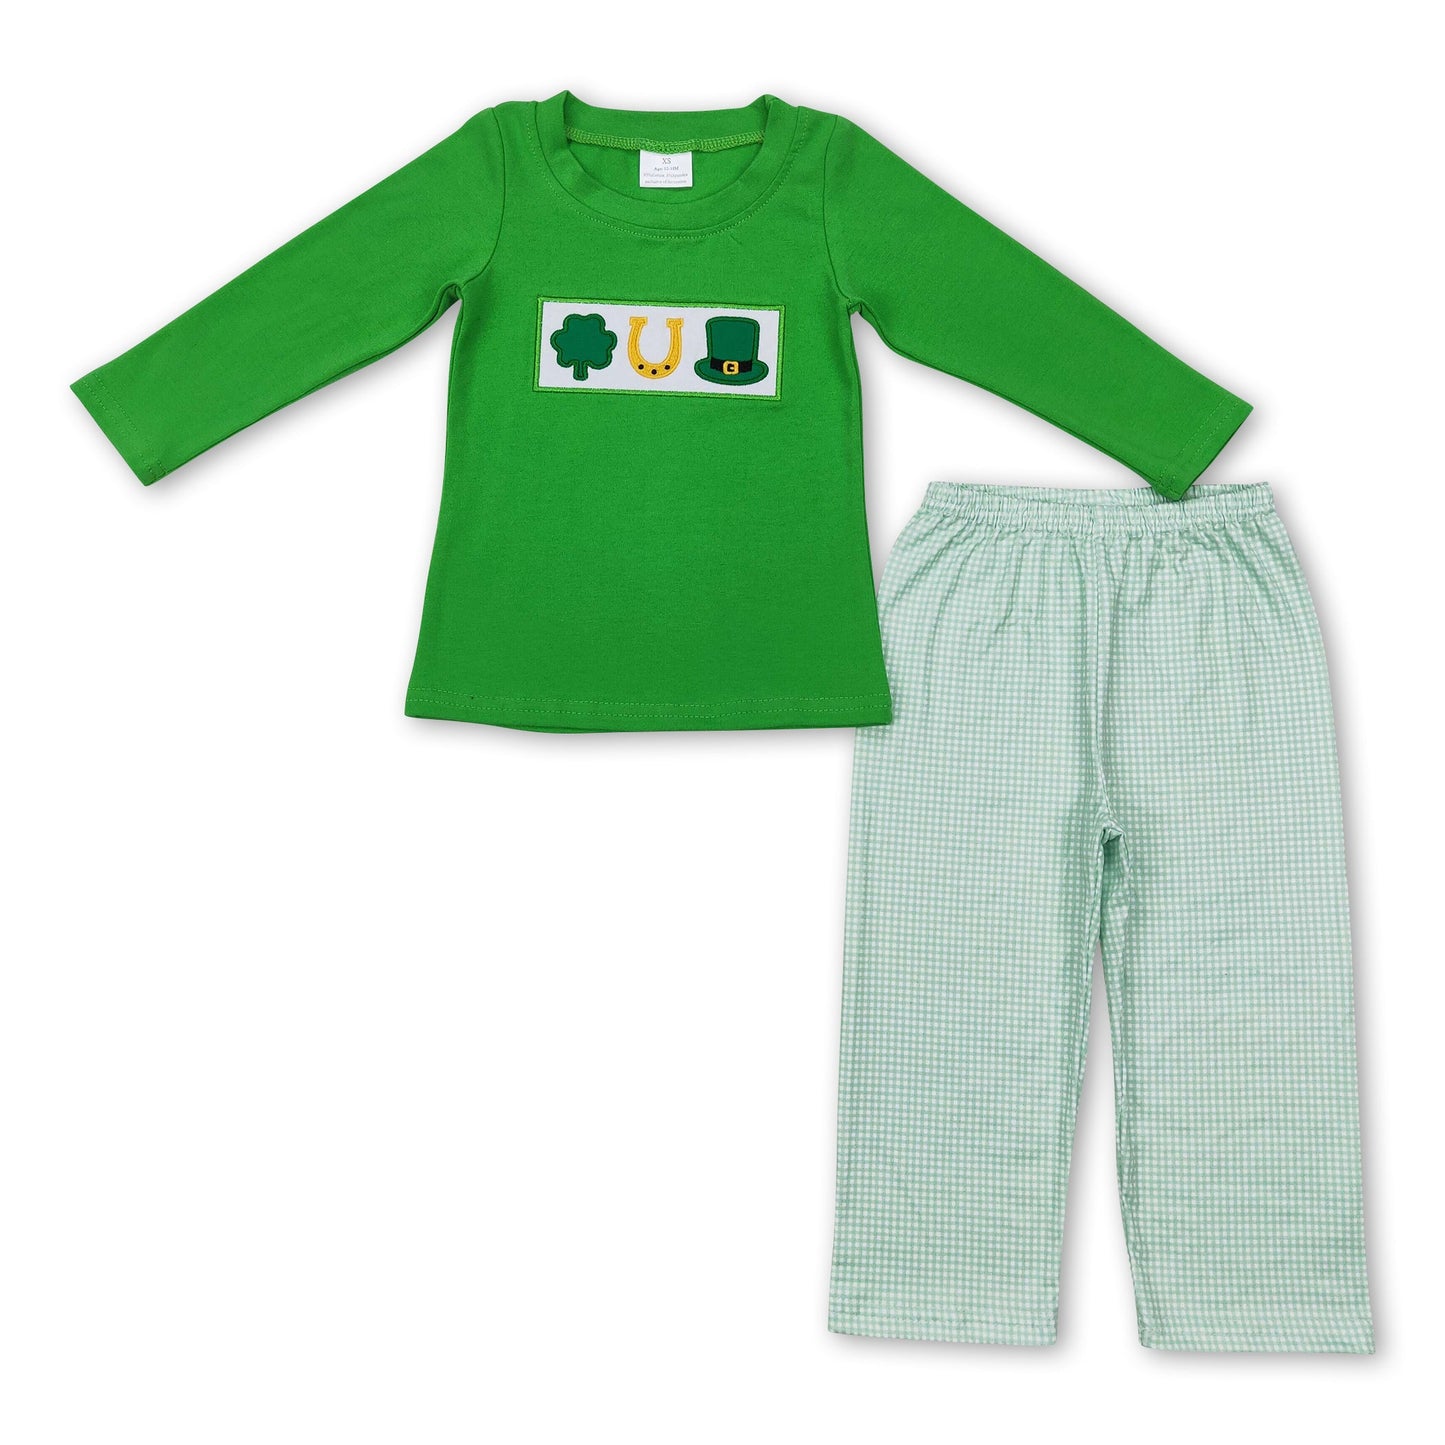 Green clover hat top plaid pants boy st patrick's day clothes